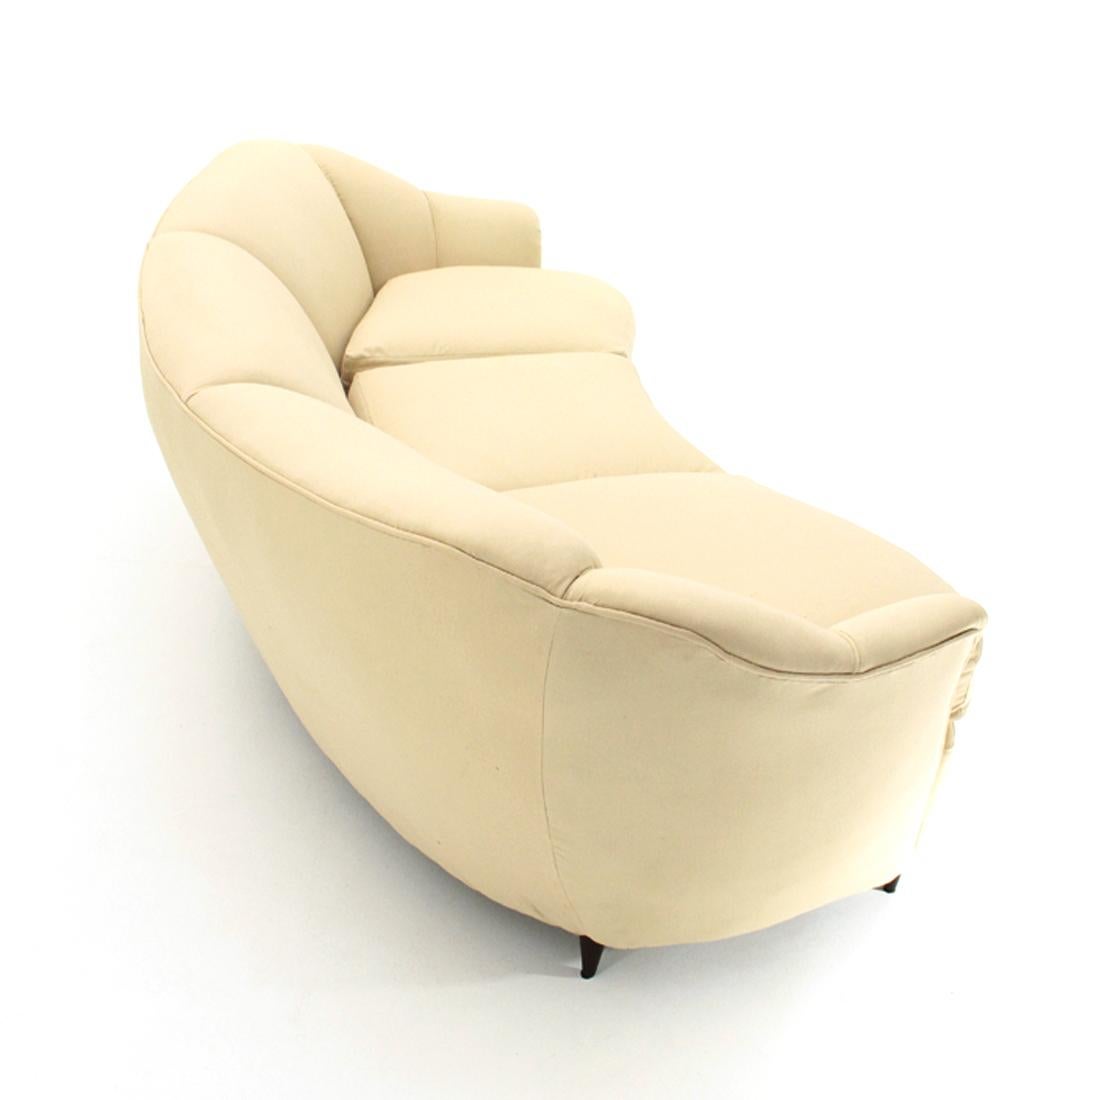 Italian Curved 3-Seat Sofa in White Cream Fabric, 1940s